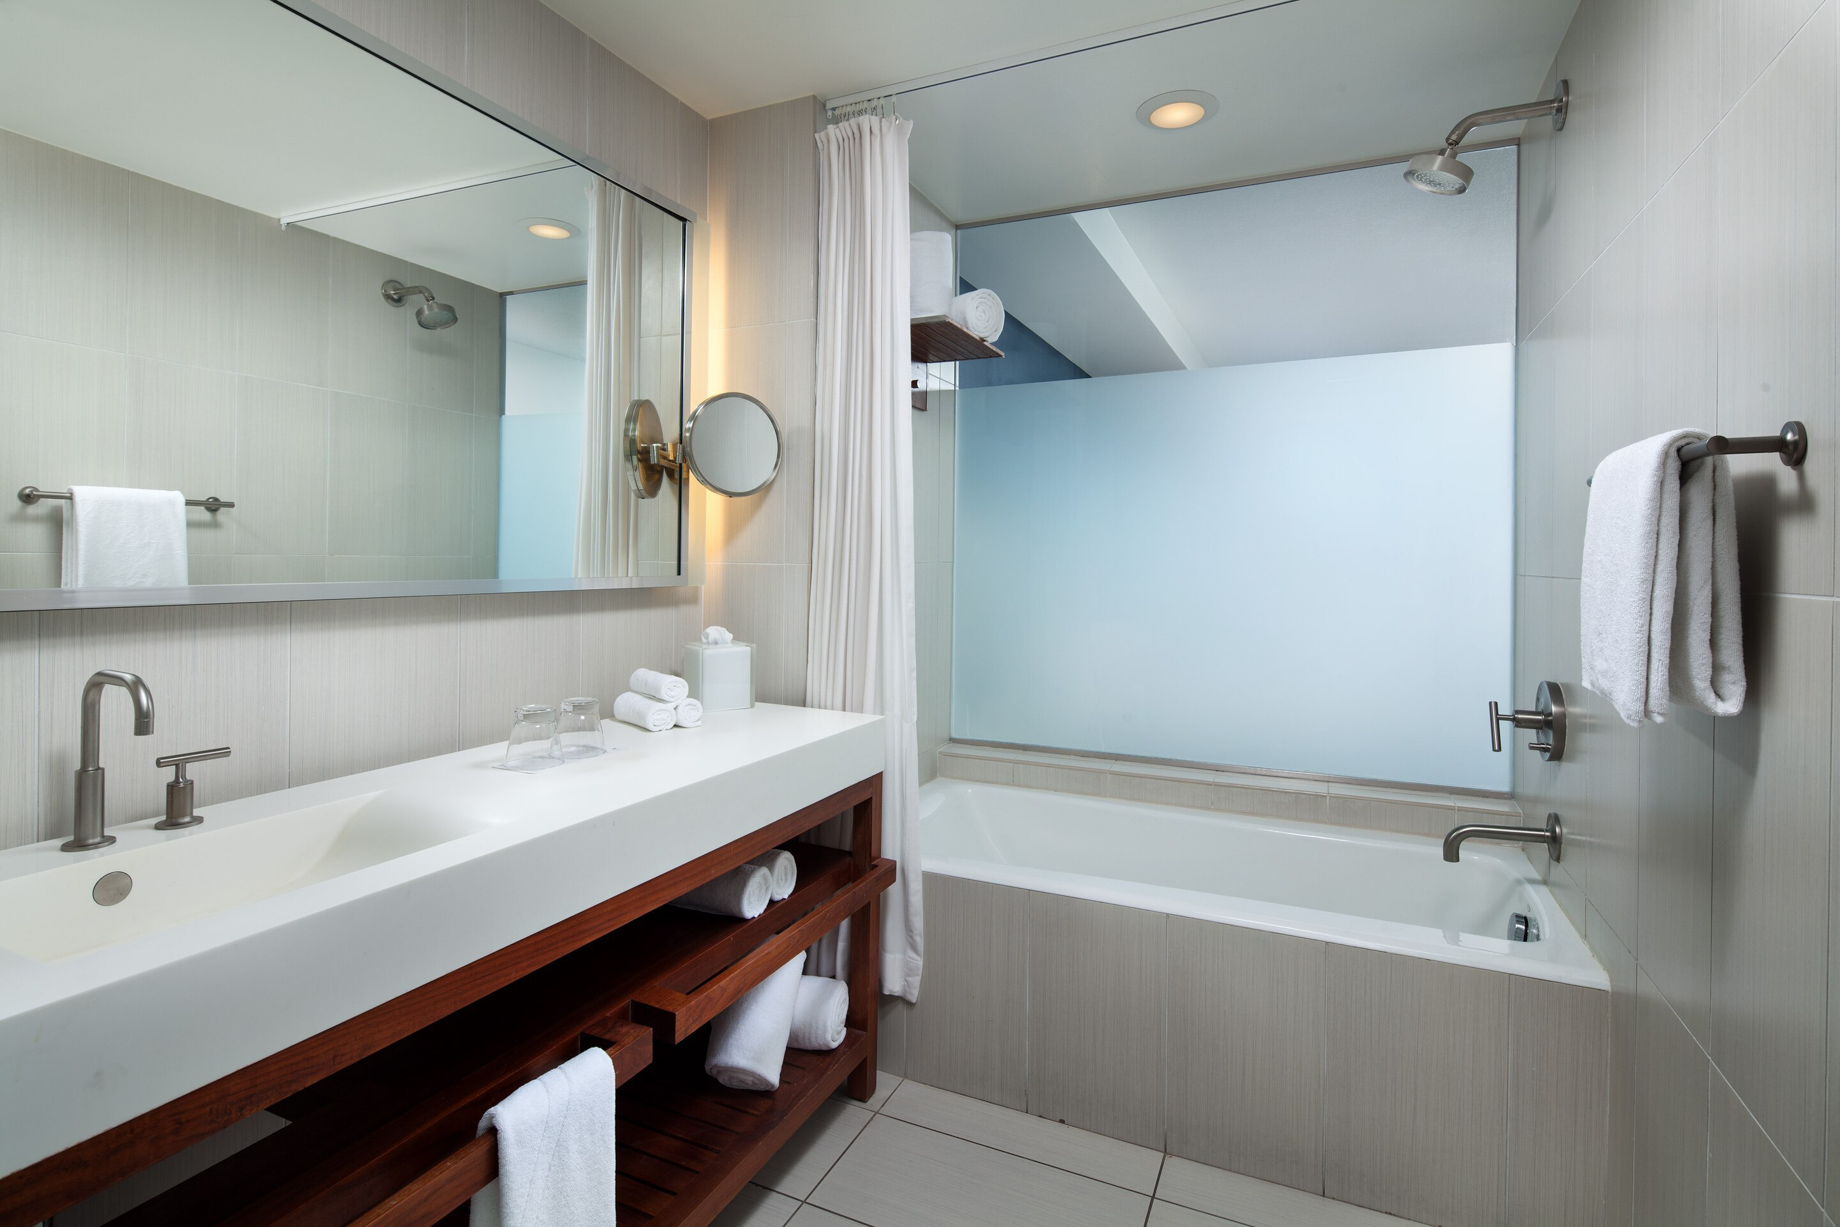 W Fort Lauderdale Hotel - Fort Lauderdale, FL, USA - Guest Room Bathroom Tub